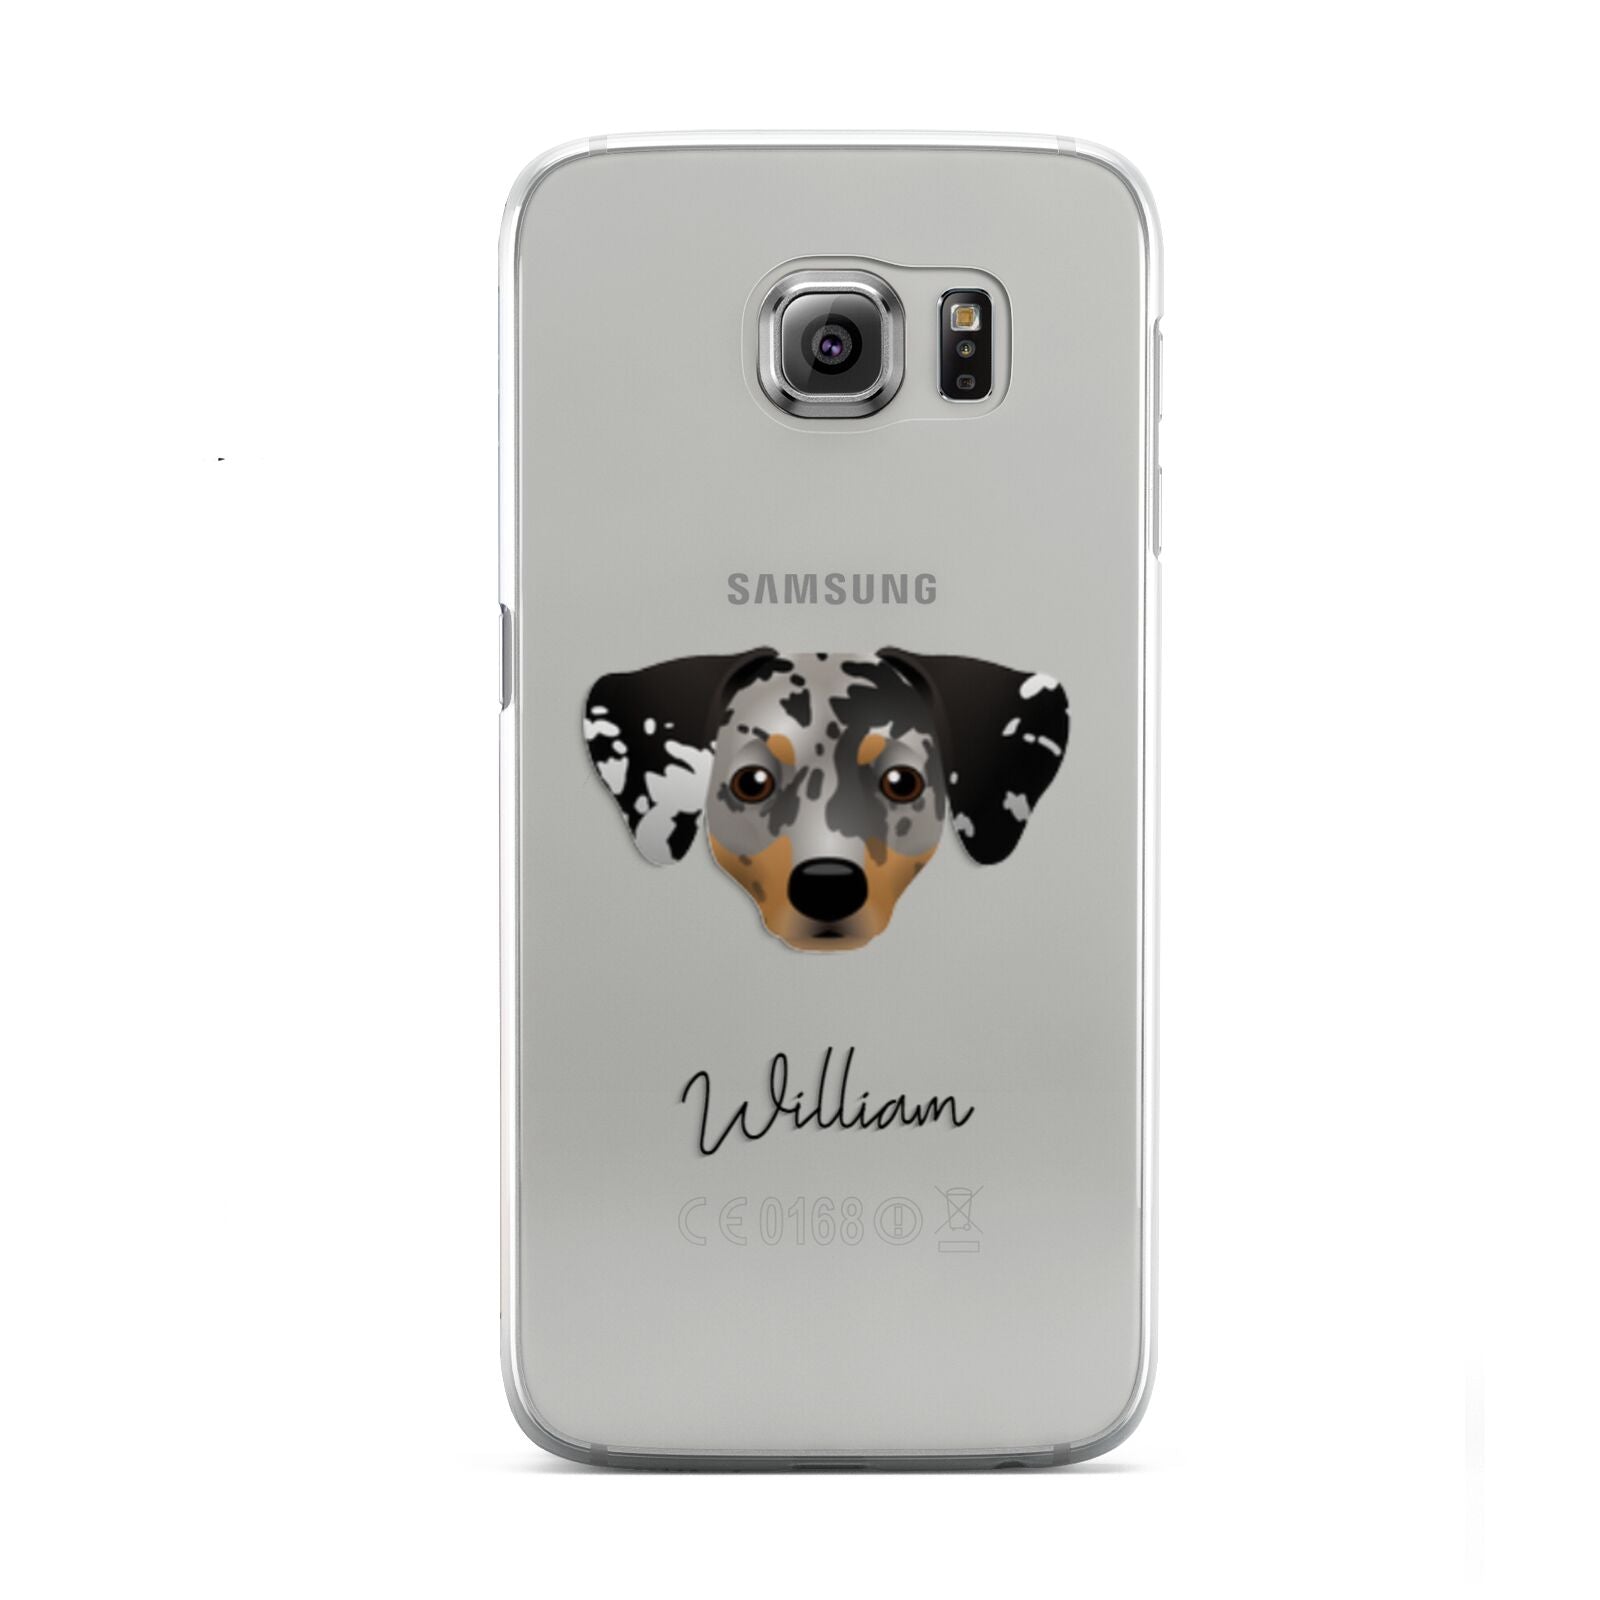 Chiweenie Personalised Samsung Galaxy S6 Case